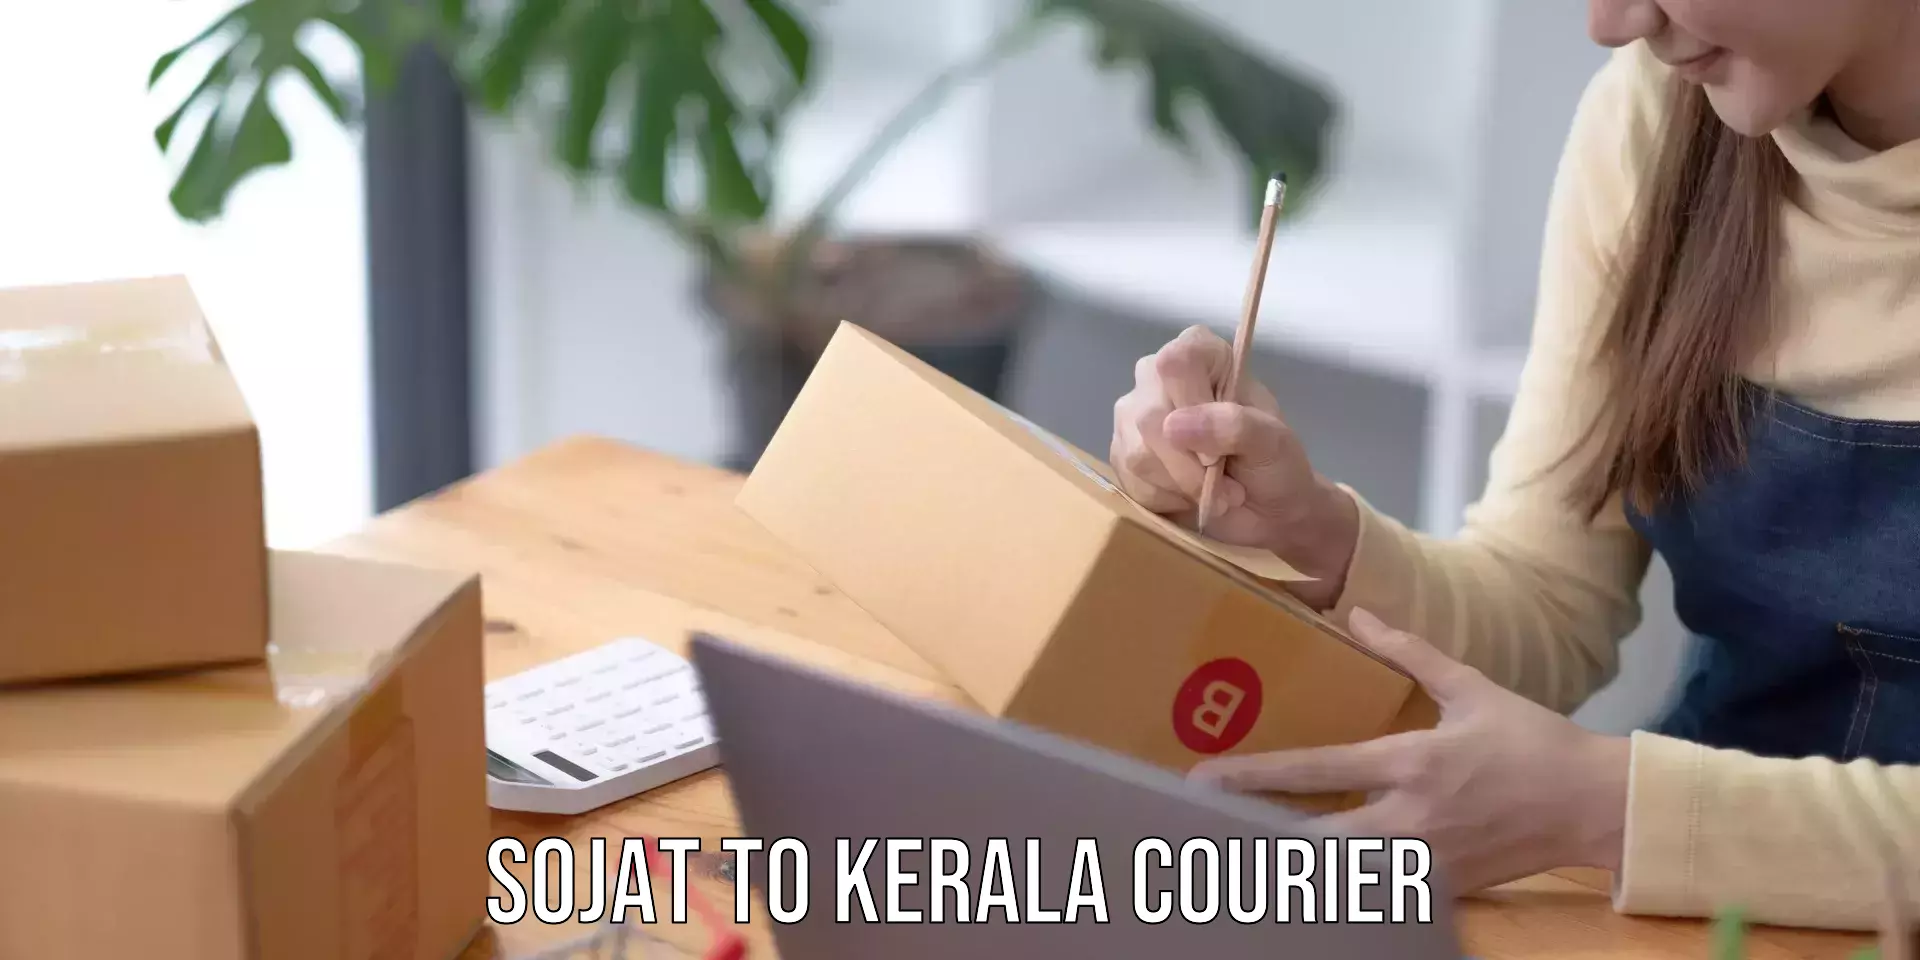 Courier service comparison Sojat to Kochi